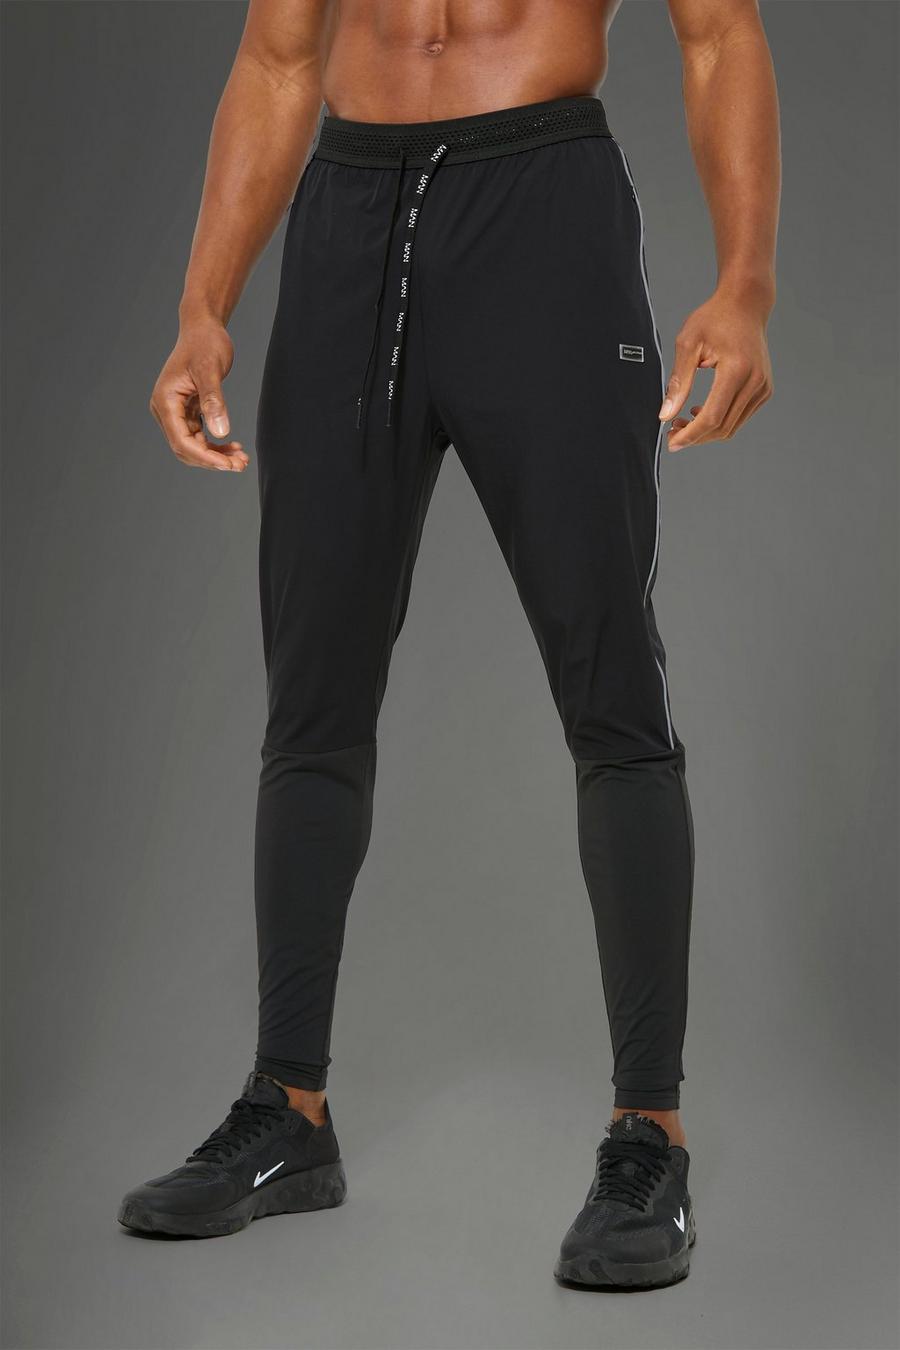 Pantaloni tecnici da corsa Man Active leggeri Skinny Fit , Nero black